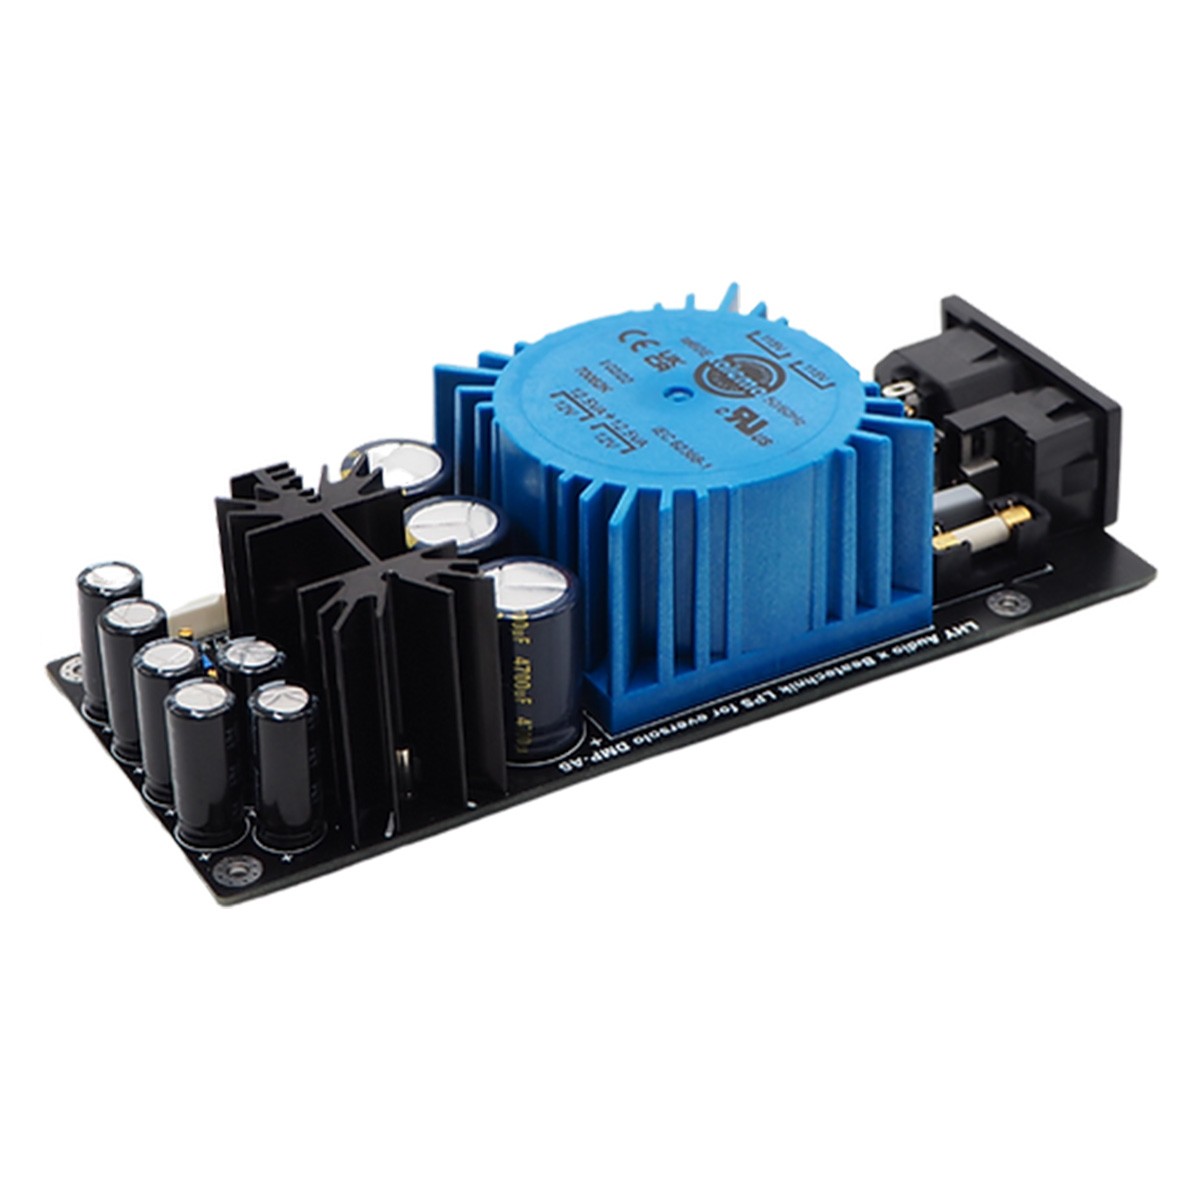 BEATECHNIK x LHY AUDIO LPS-A6 220V Linear Power Supply Module Kit